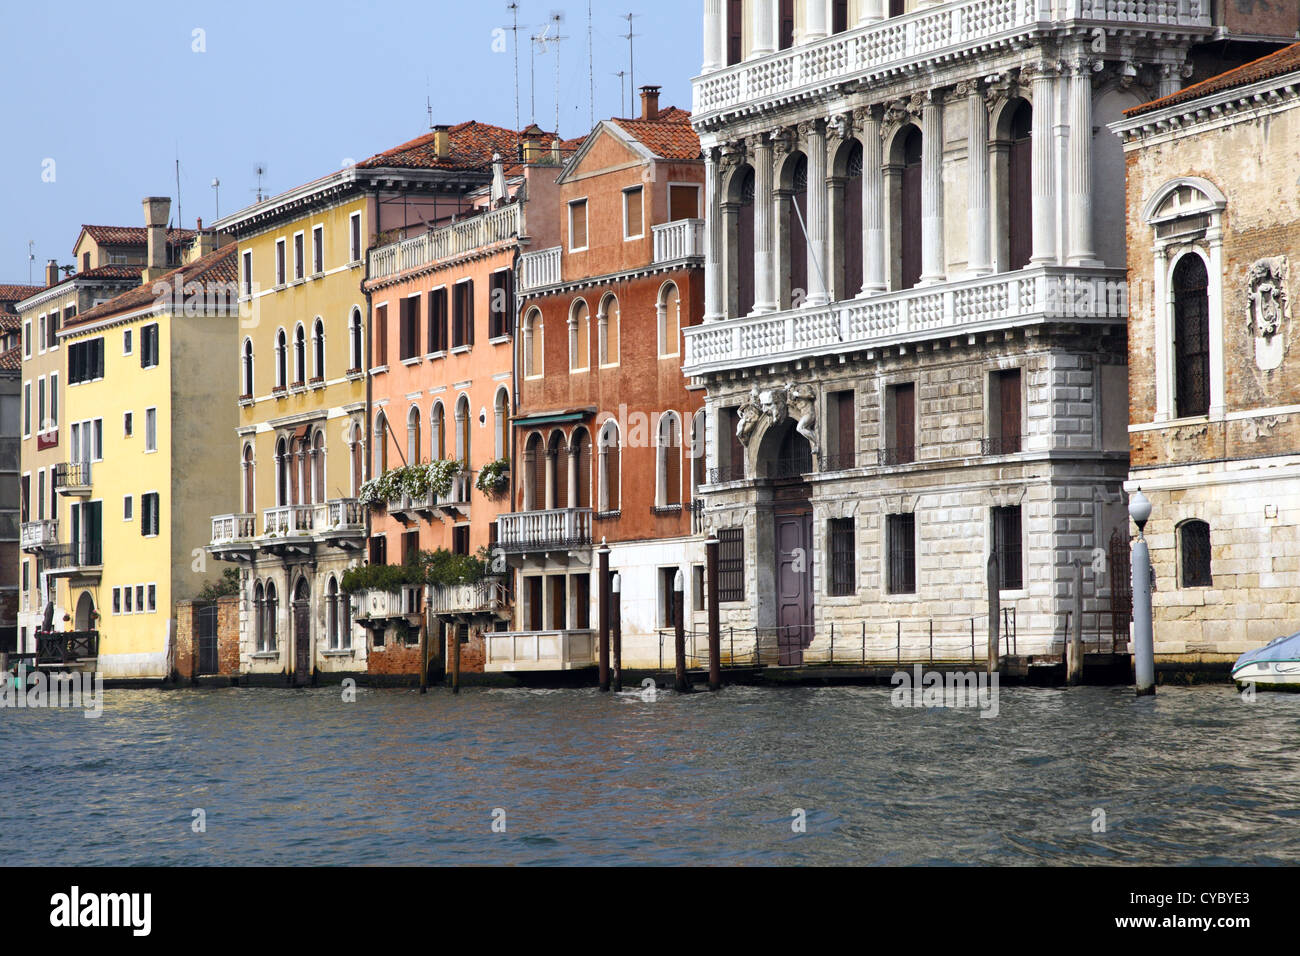 Bella Italia-Serie. Venedig - die Perle Italiens. Venezianischen Häusern in einen Canal Grande. Venedig, Italien. Stockfoto